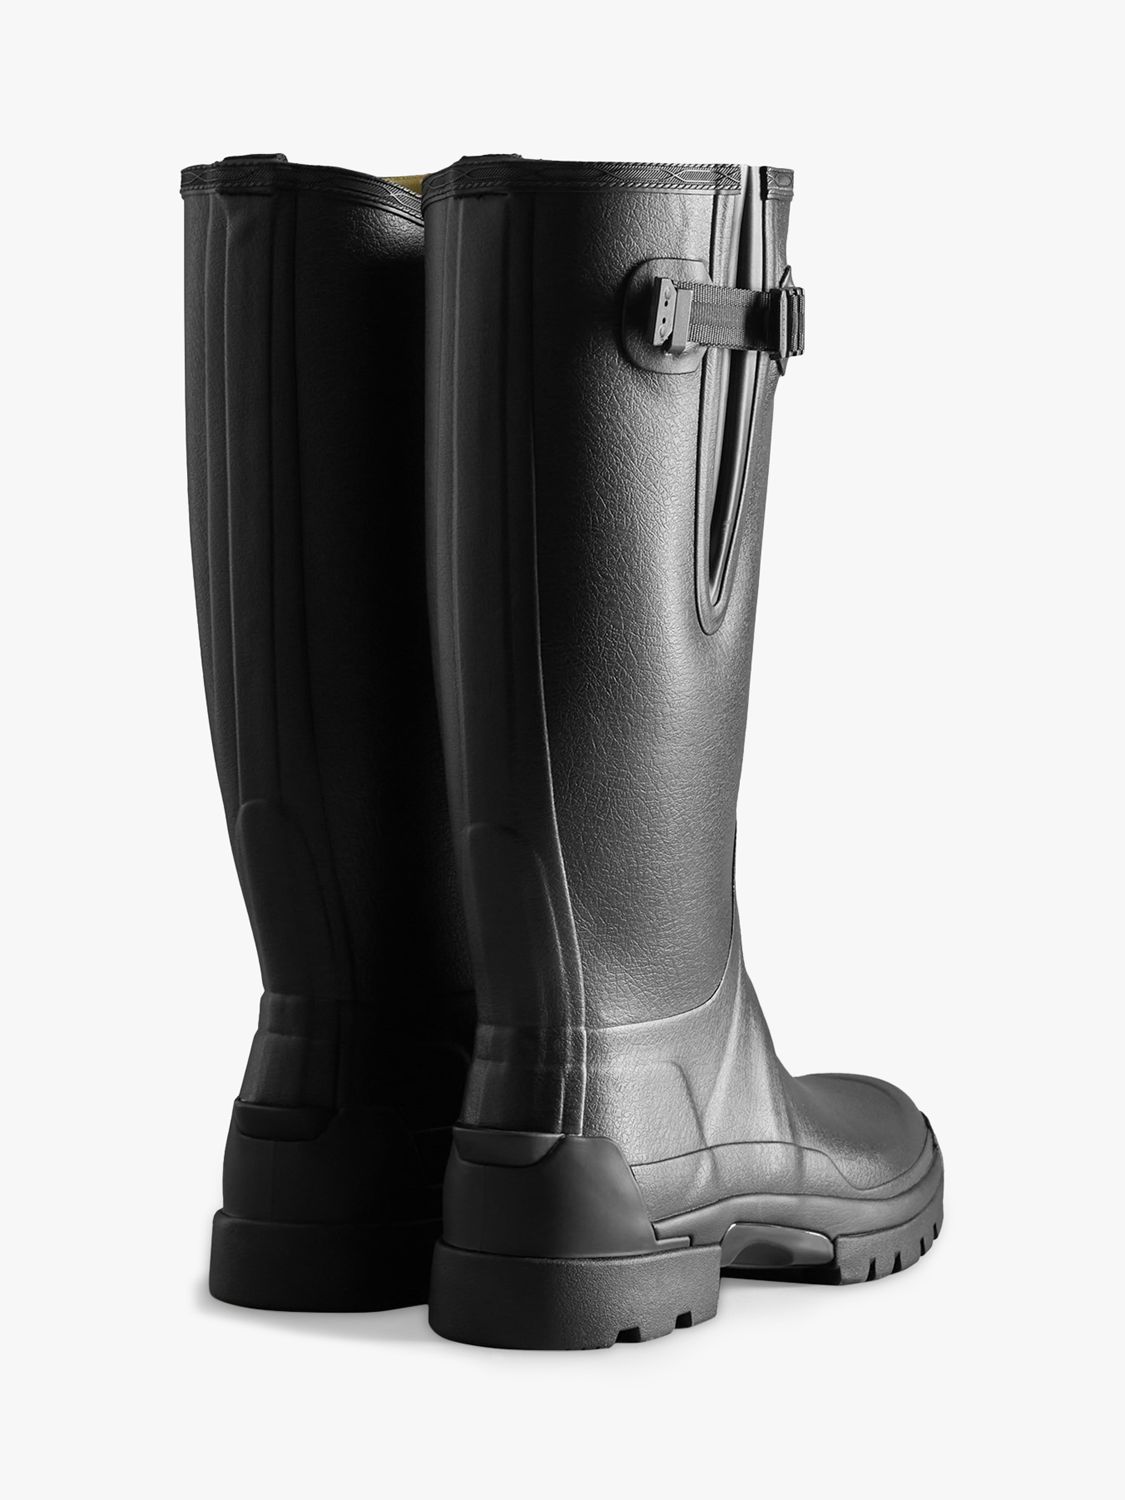 Hunter Men's Balmoral Adjustable Wellington Boots, Black, 7